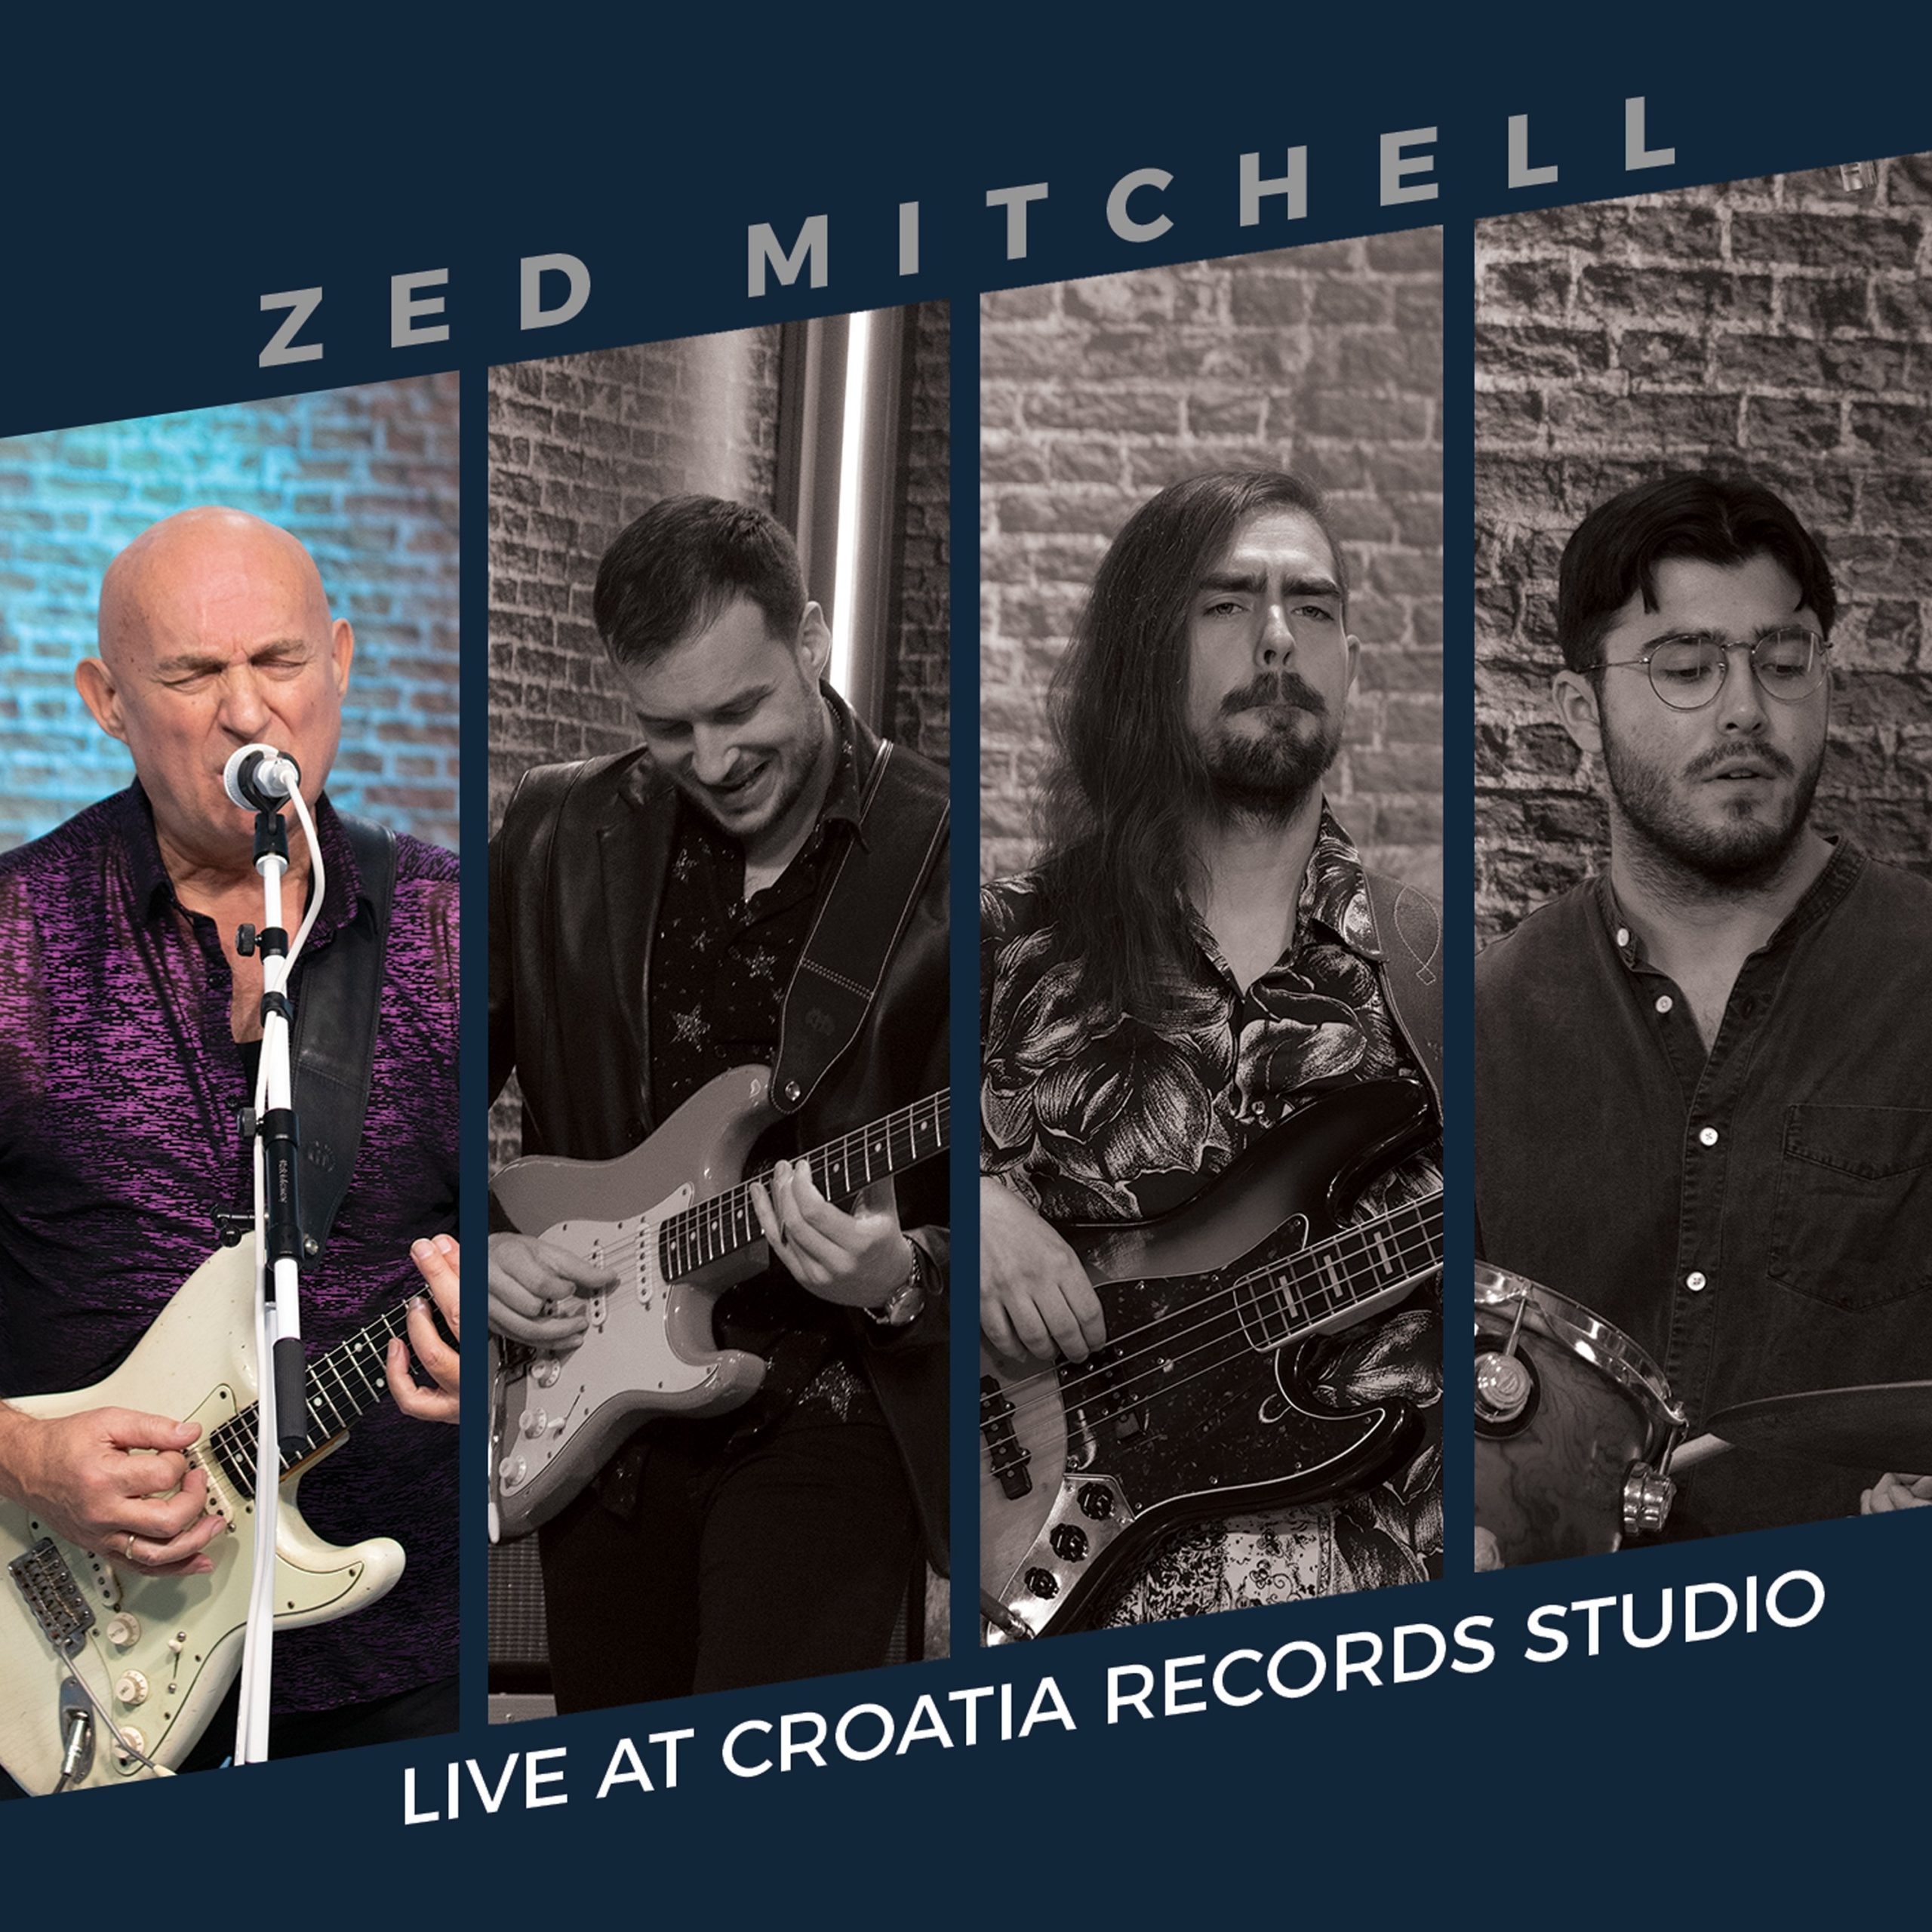 Zed Mitchell objavio Zed Mitchell objavio live album iz Croatia Records Studija